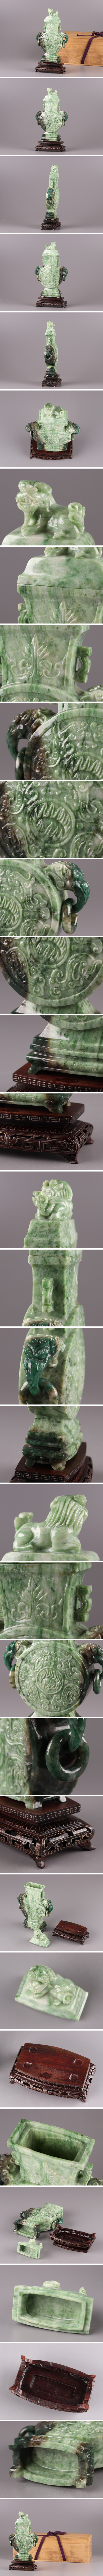 HOT通販中国古玩 唐物 緑砡石 翡翠 置物 遊環 香炉 時代物 極上品 初だし品 4448 その他